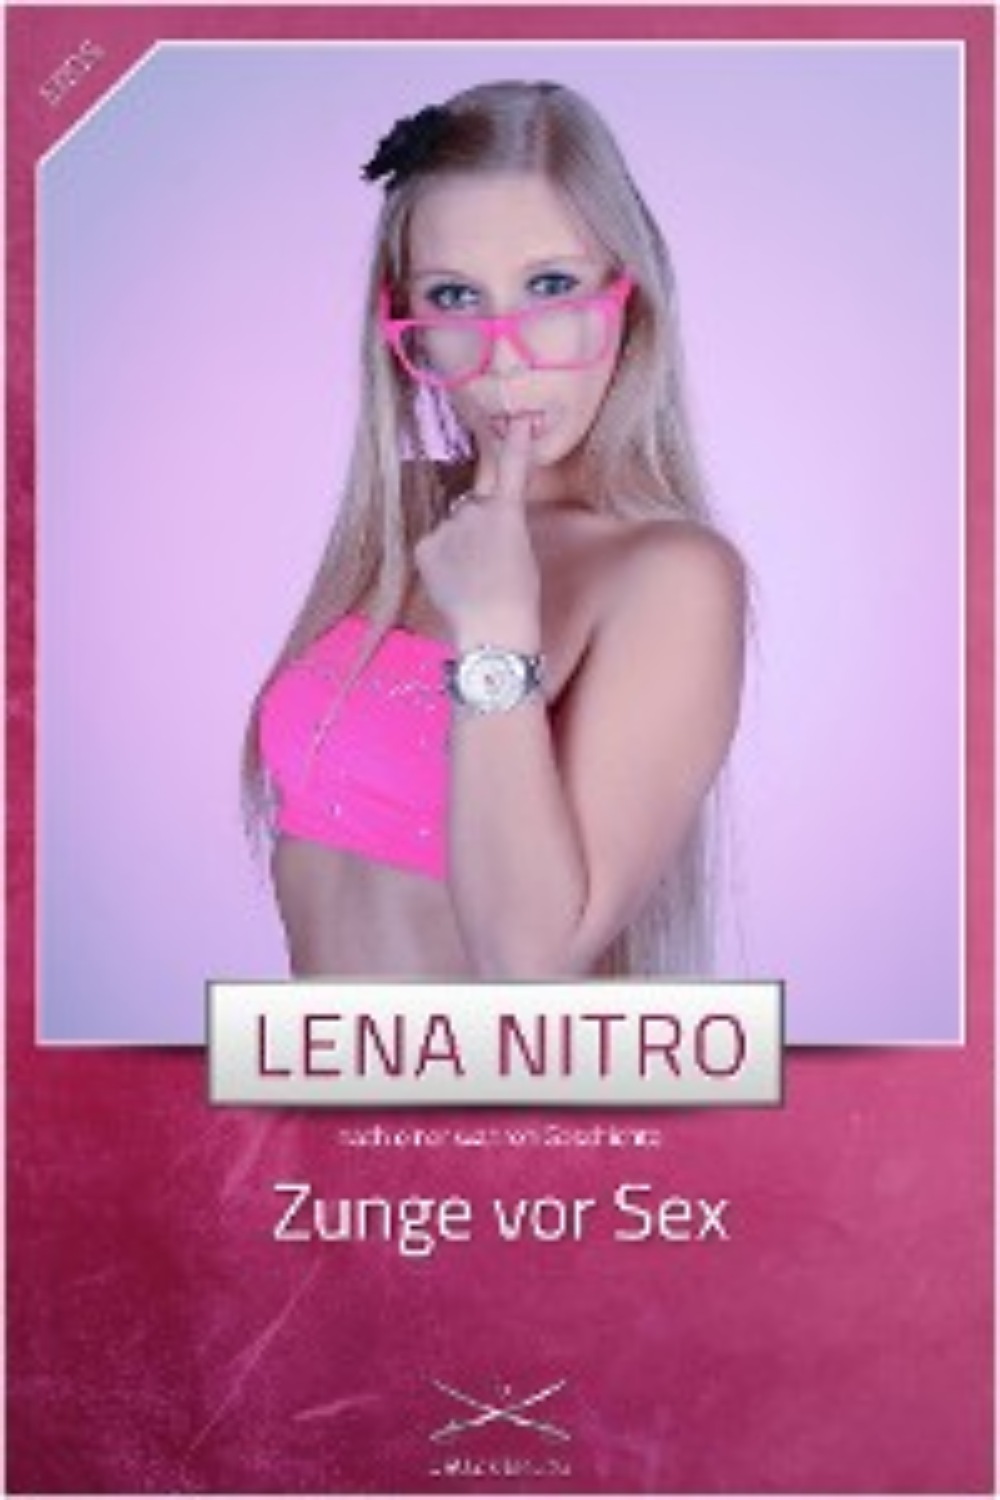 Lena nitro lover fan pictures